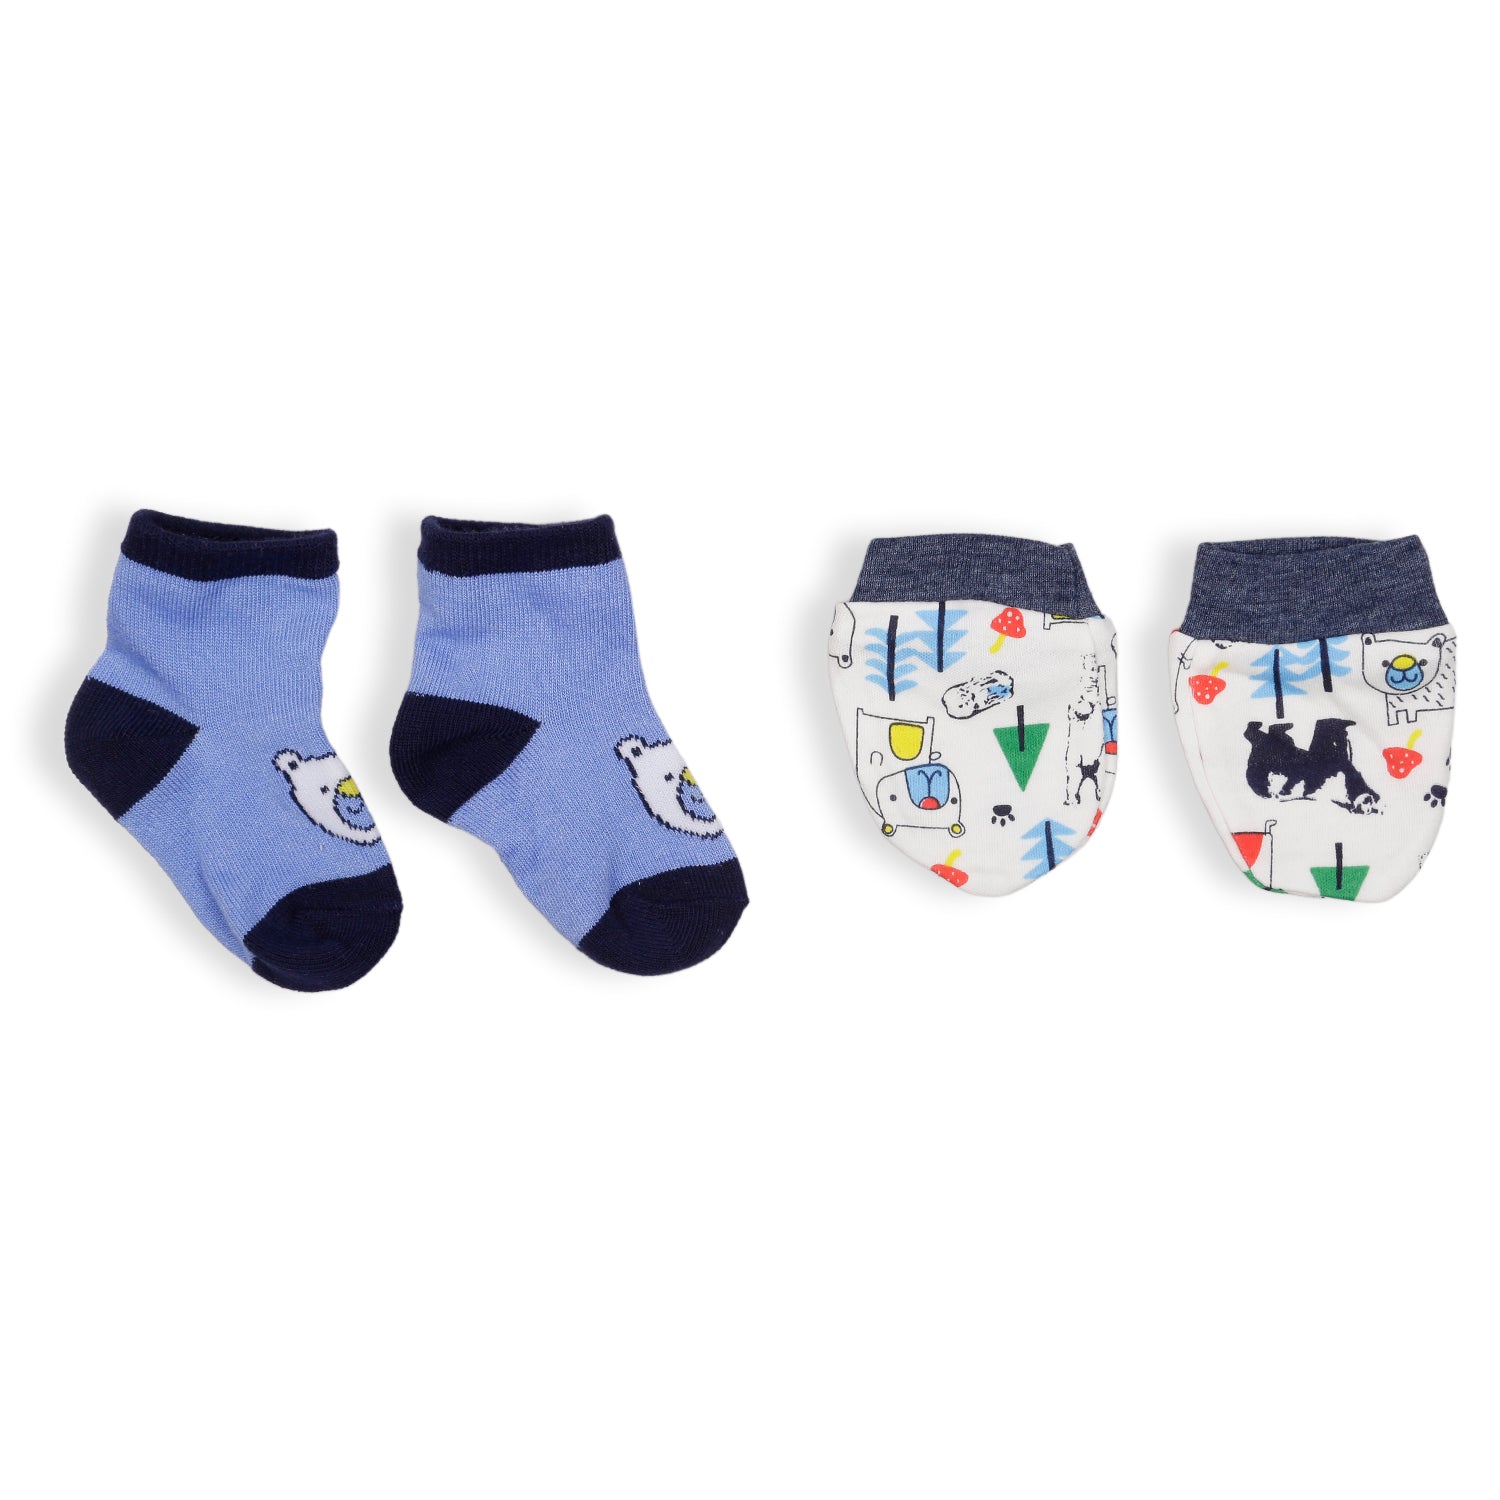 Feeding Bibs Socks And Mittens Set Of 3 Bear Printed Blue - Baby Moo